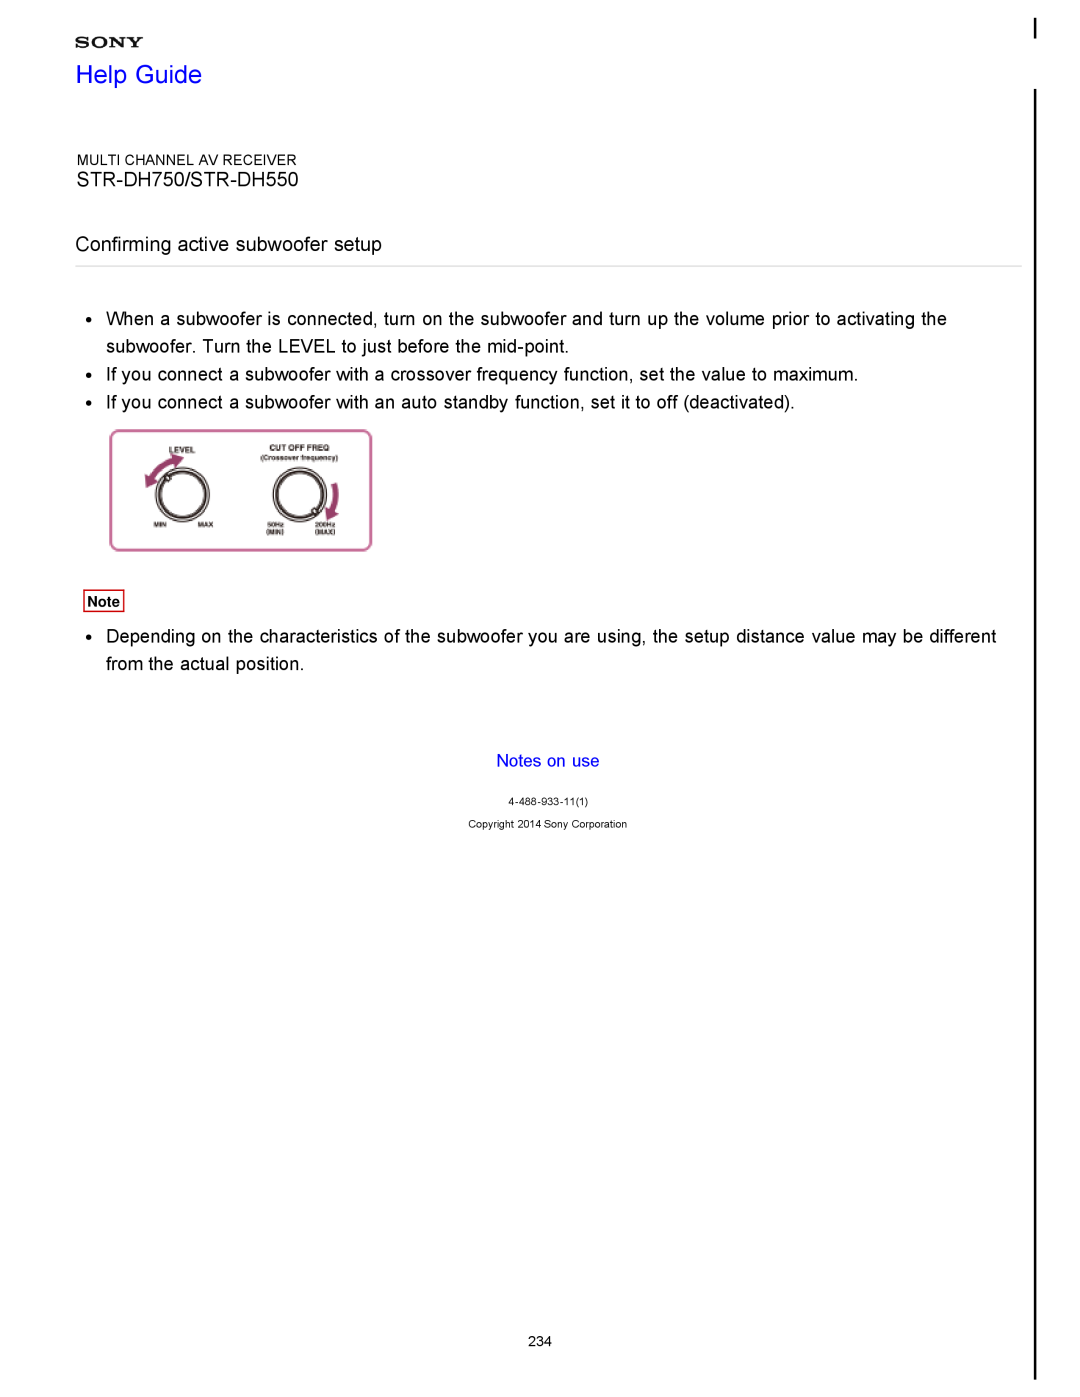 Sony STR-FH750 manual Confirming active subwoofer setup, Help Guide, STR-DH750/STR-DH550, Multi Channel Av Receiver 